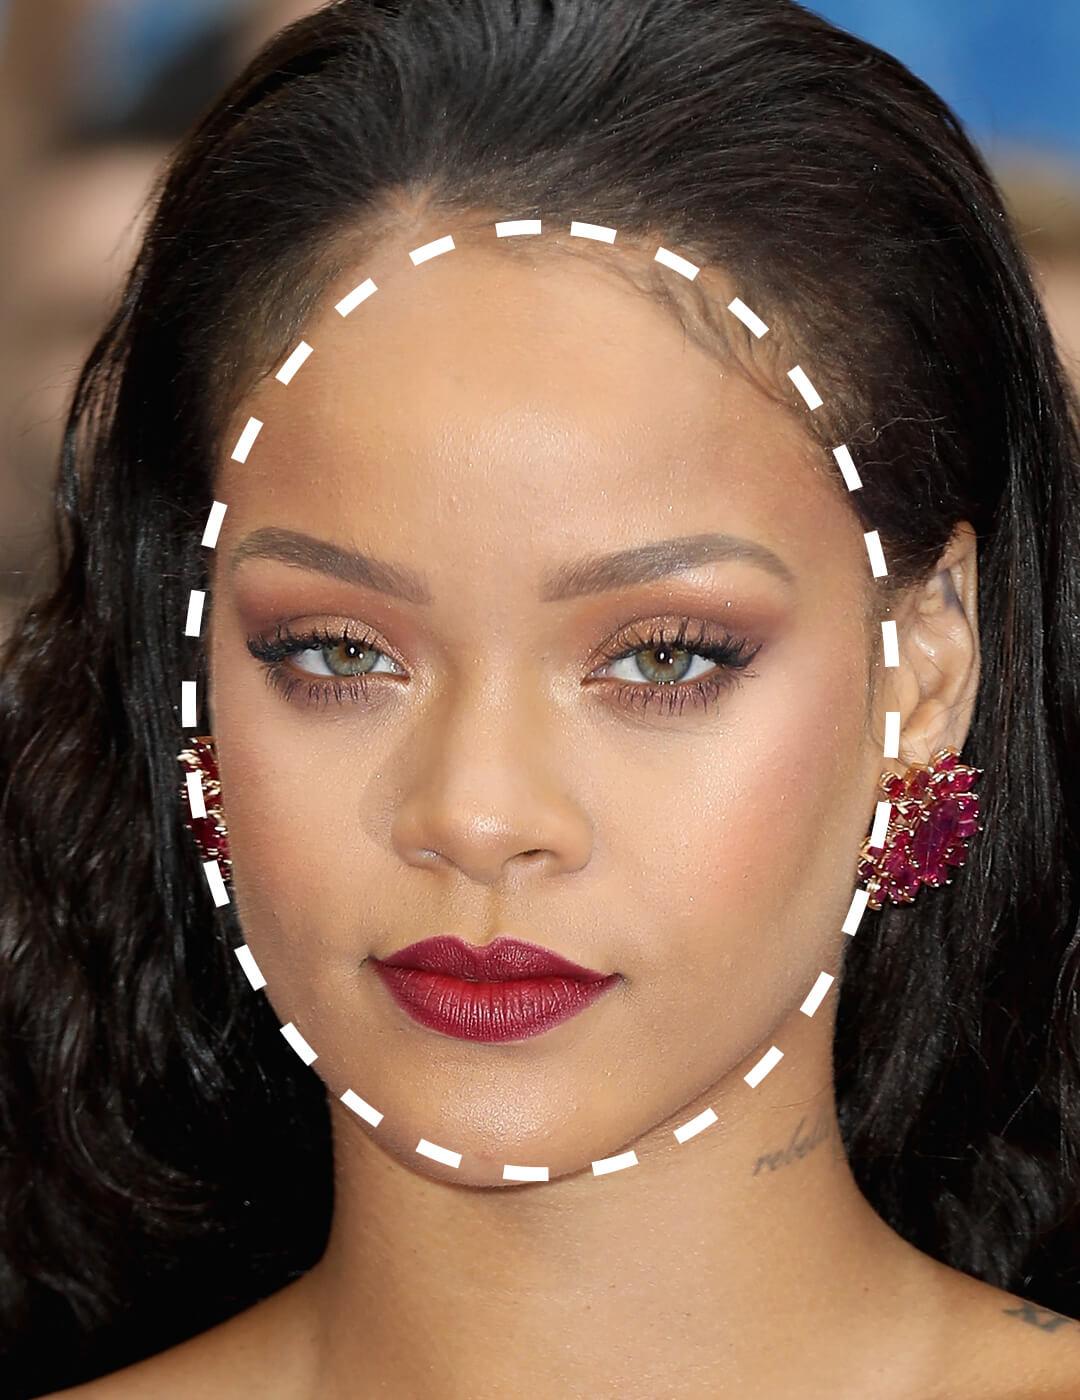 Close-up of Rihanna with a broken line oval shape overlay